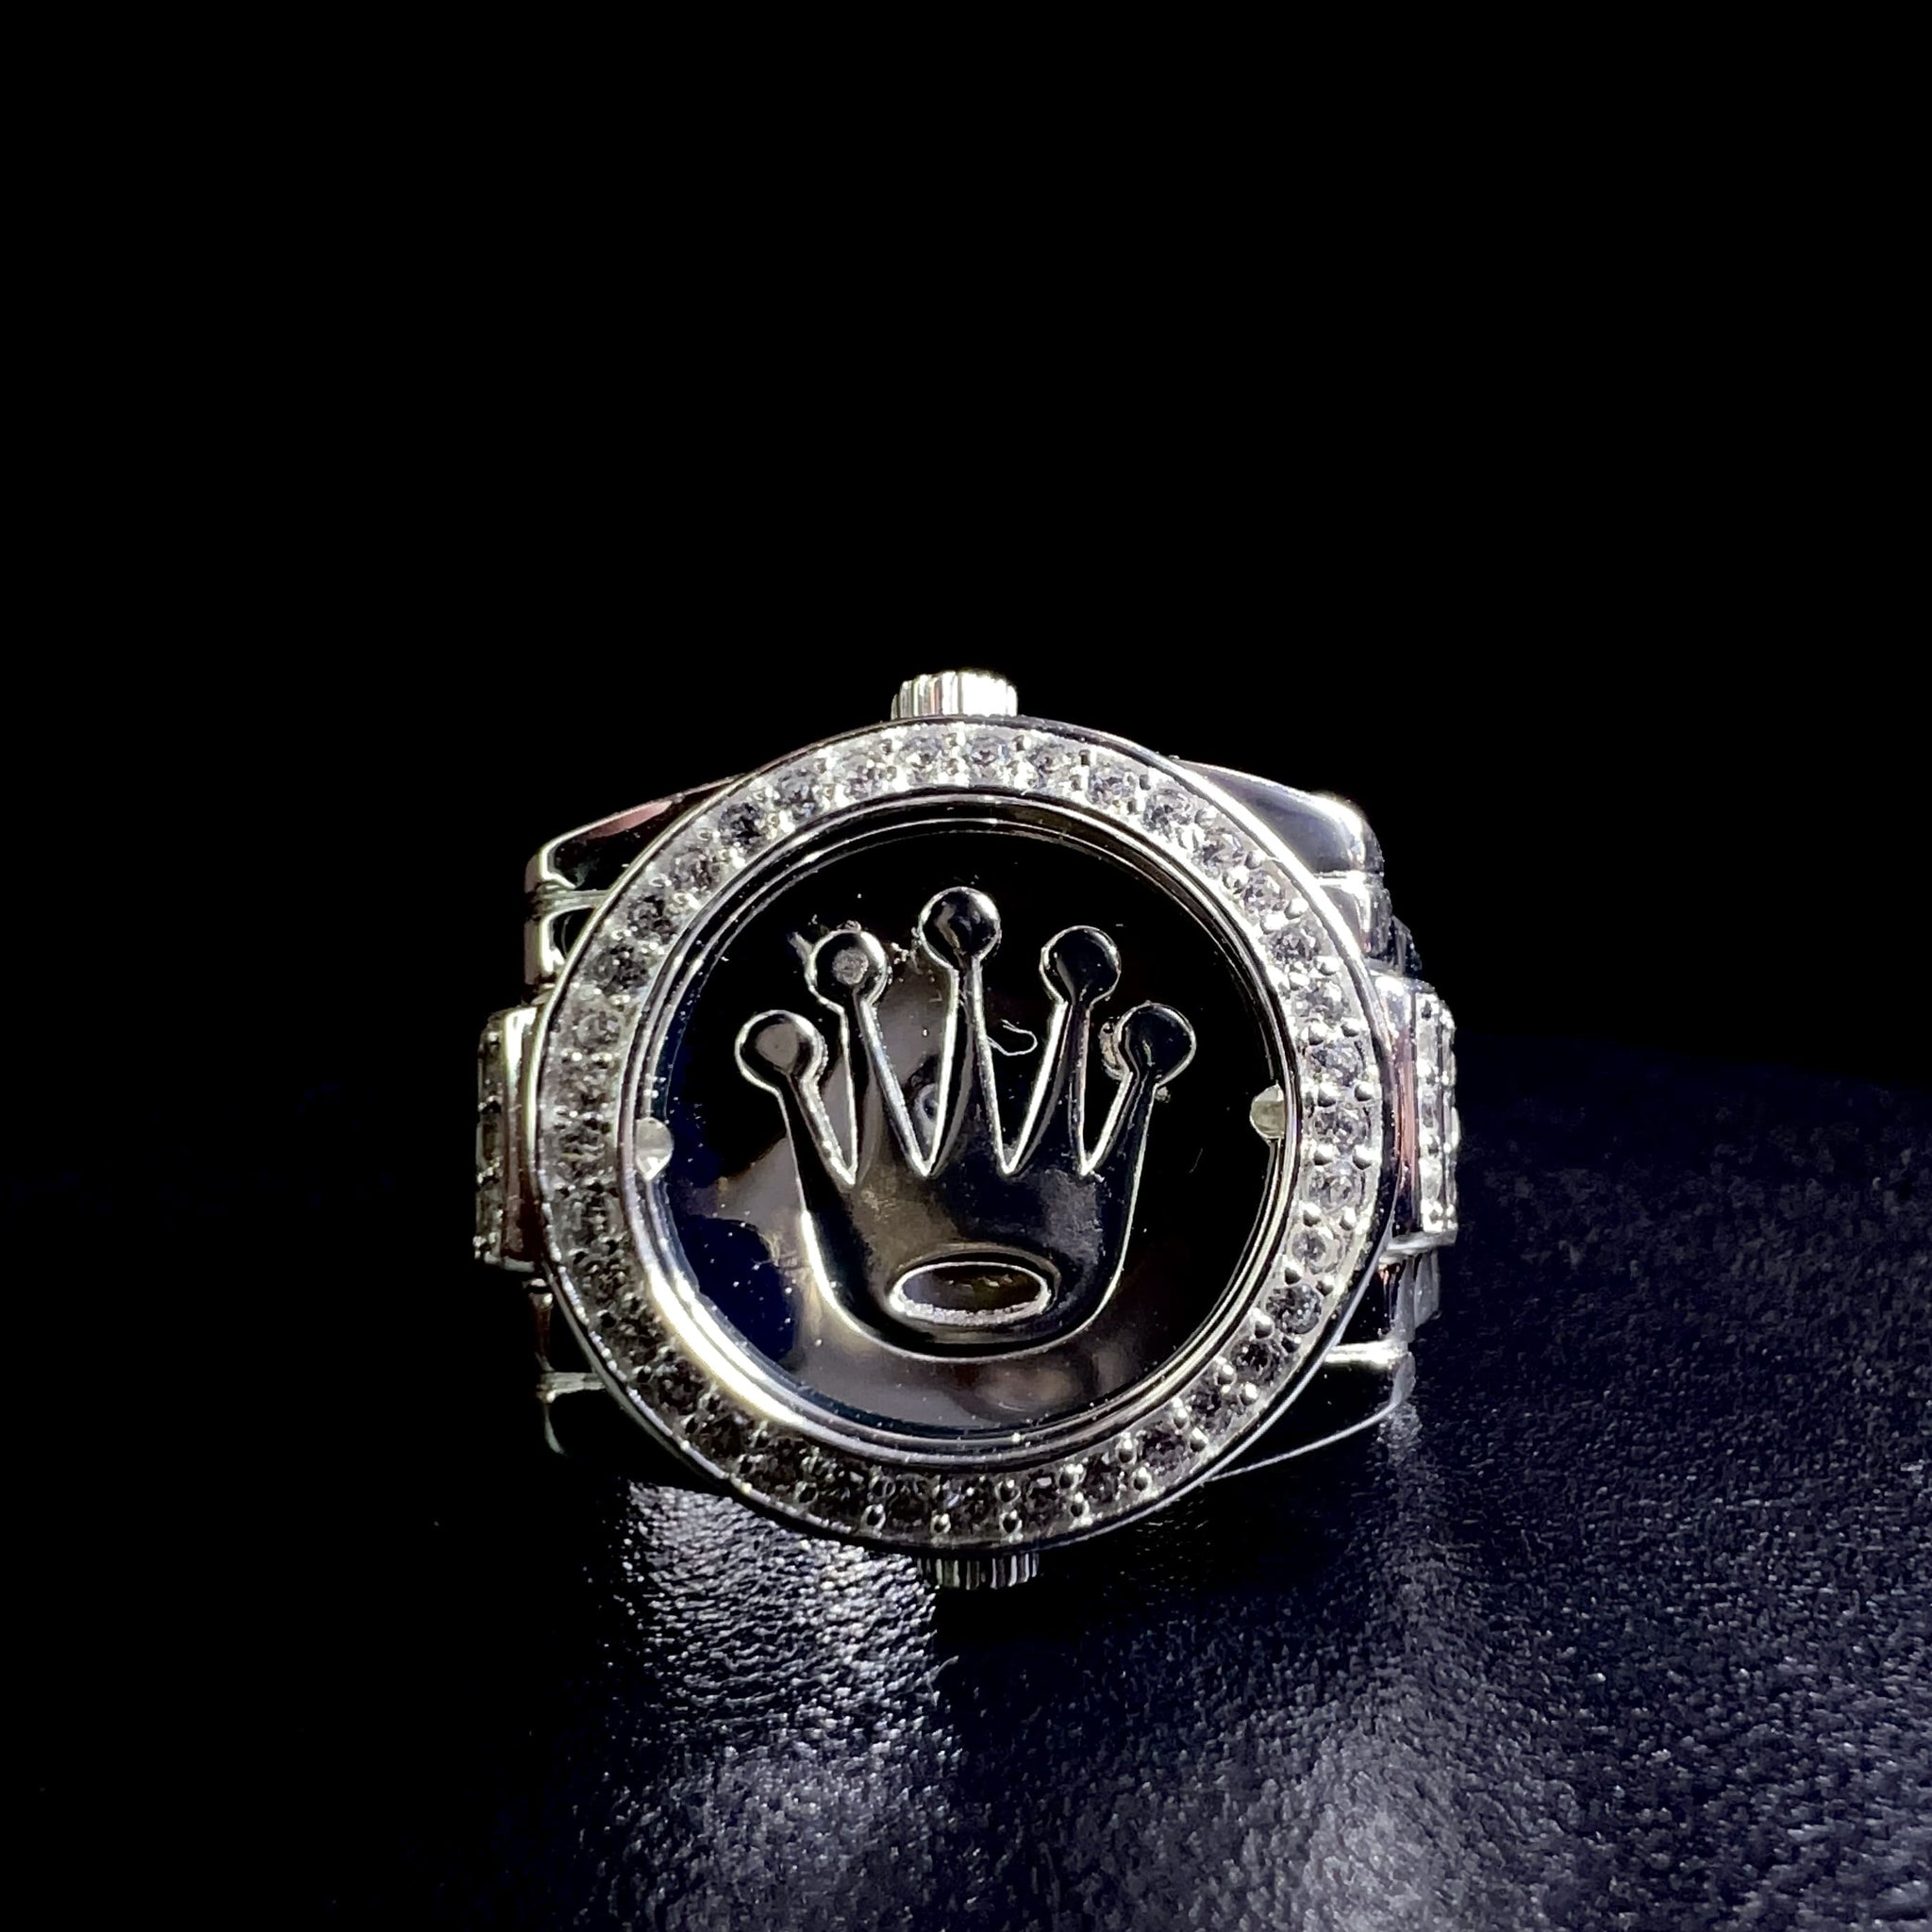 Crown Championsring - Silver 925 - Sehgal Dubai Collection